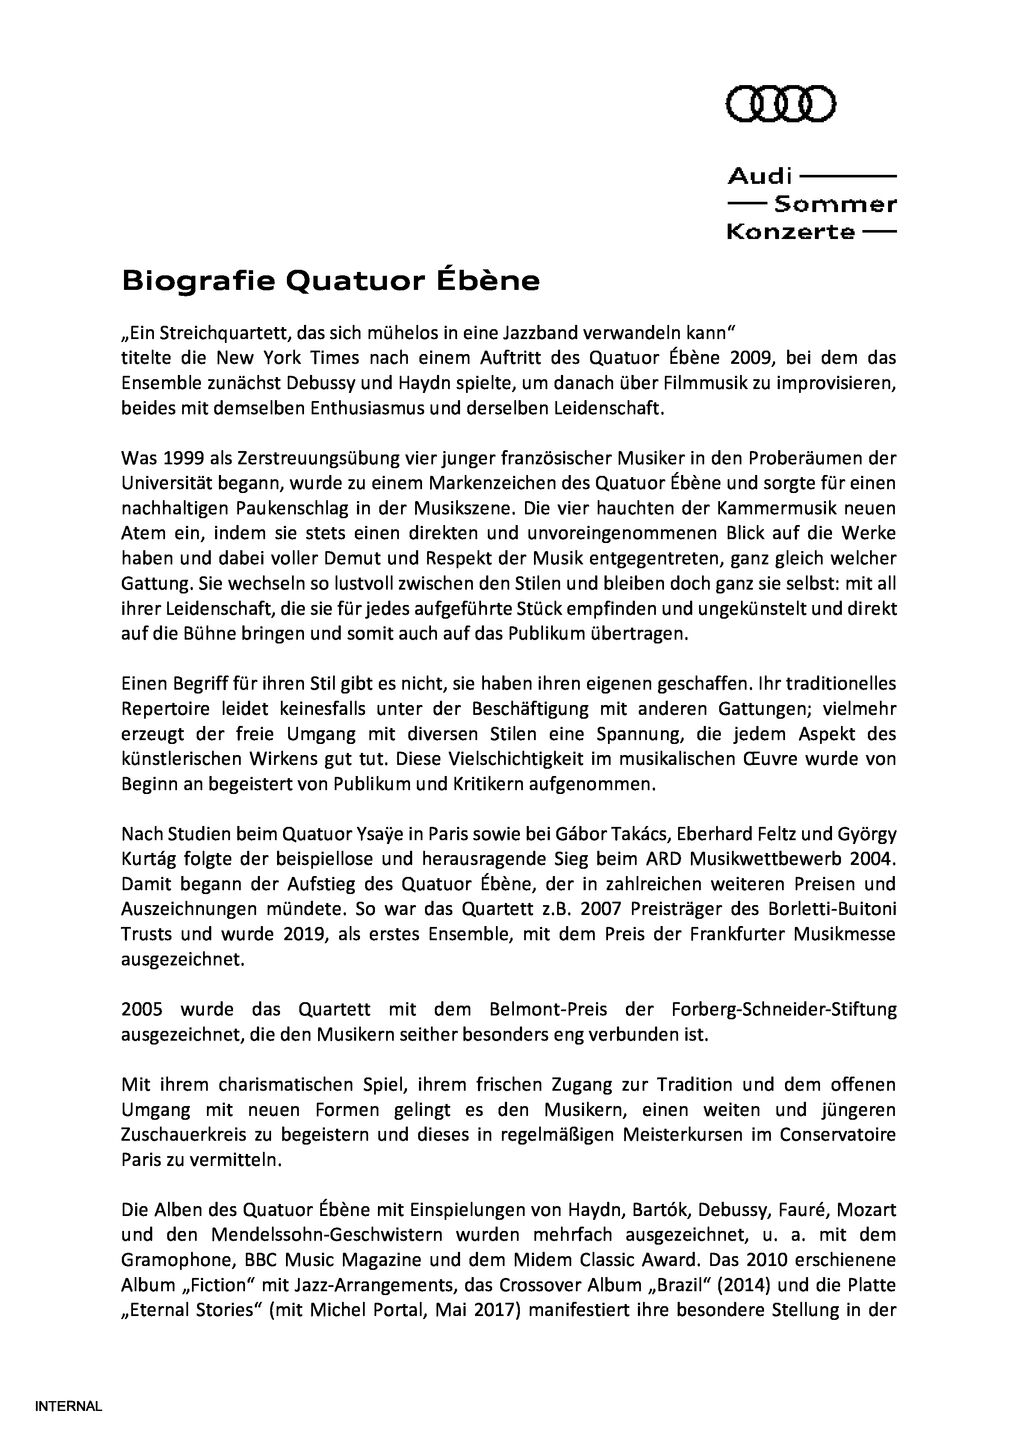 Biografie Quatuor Ébène